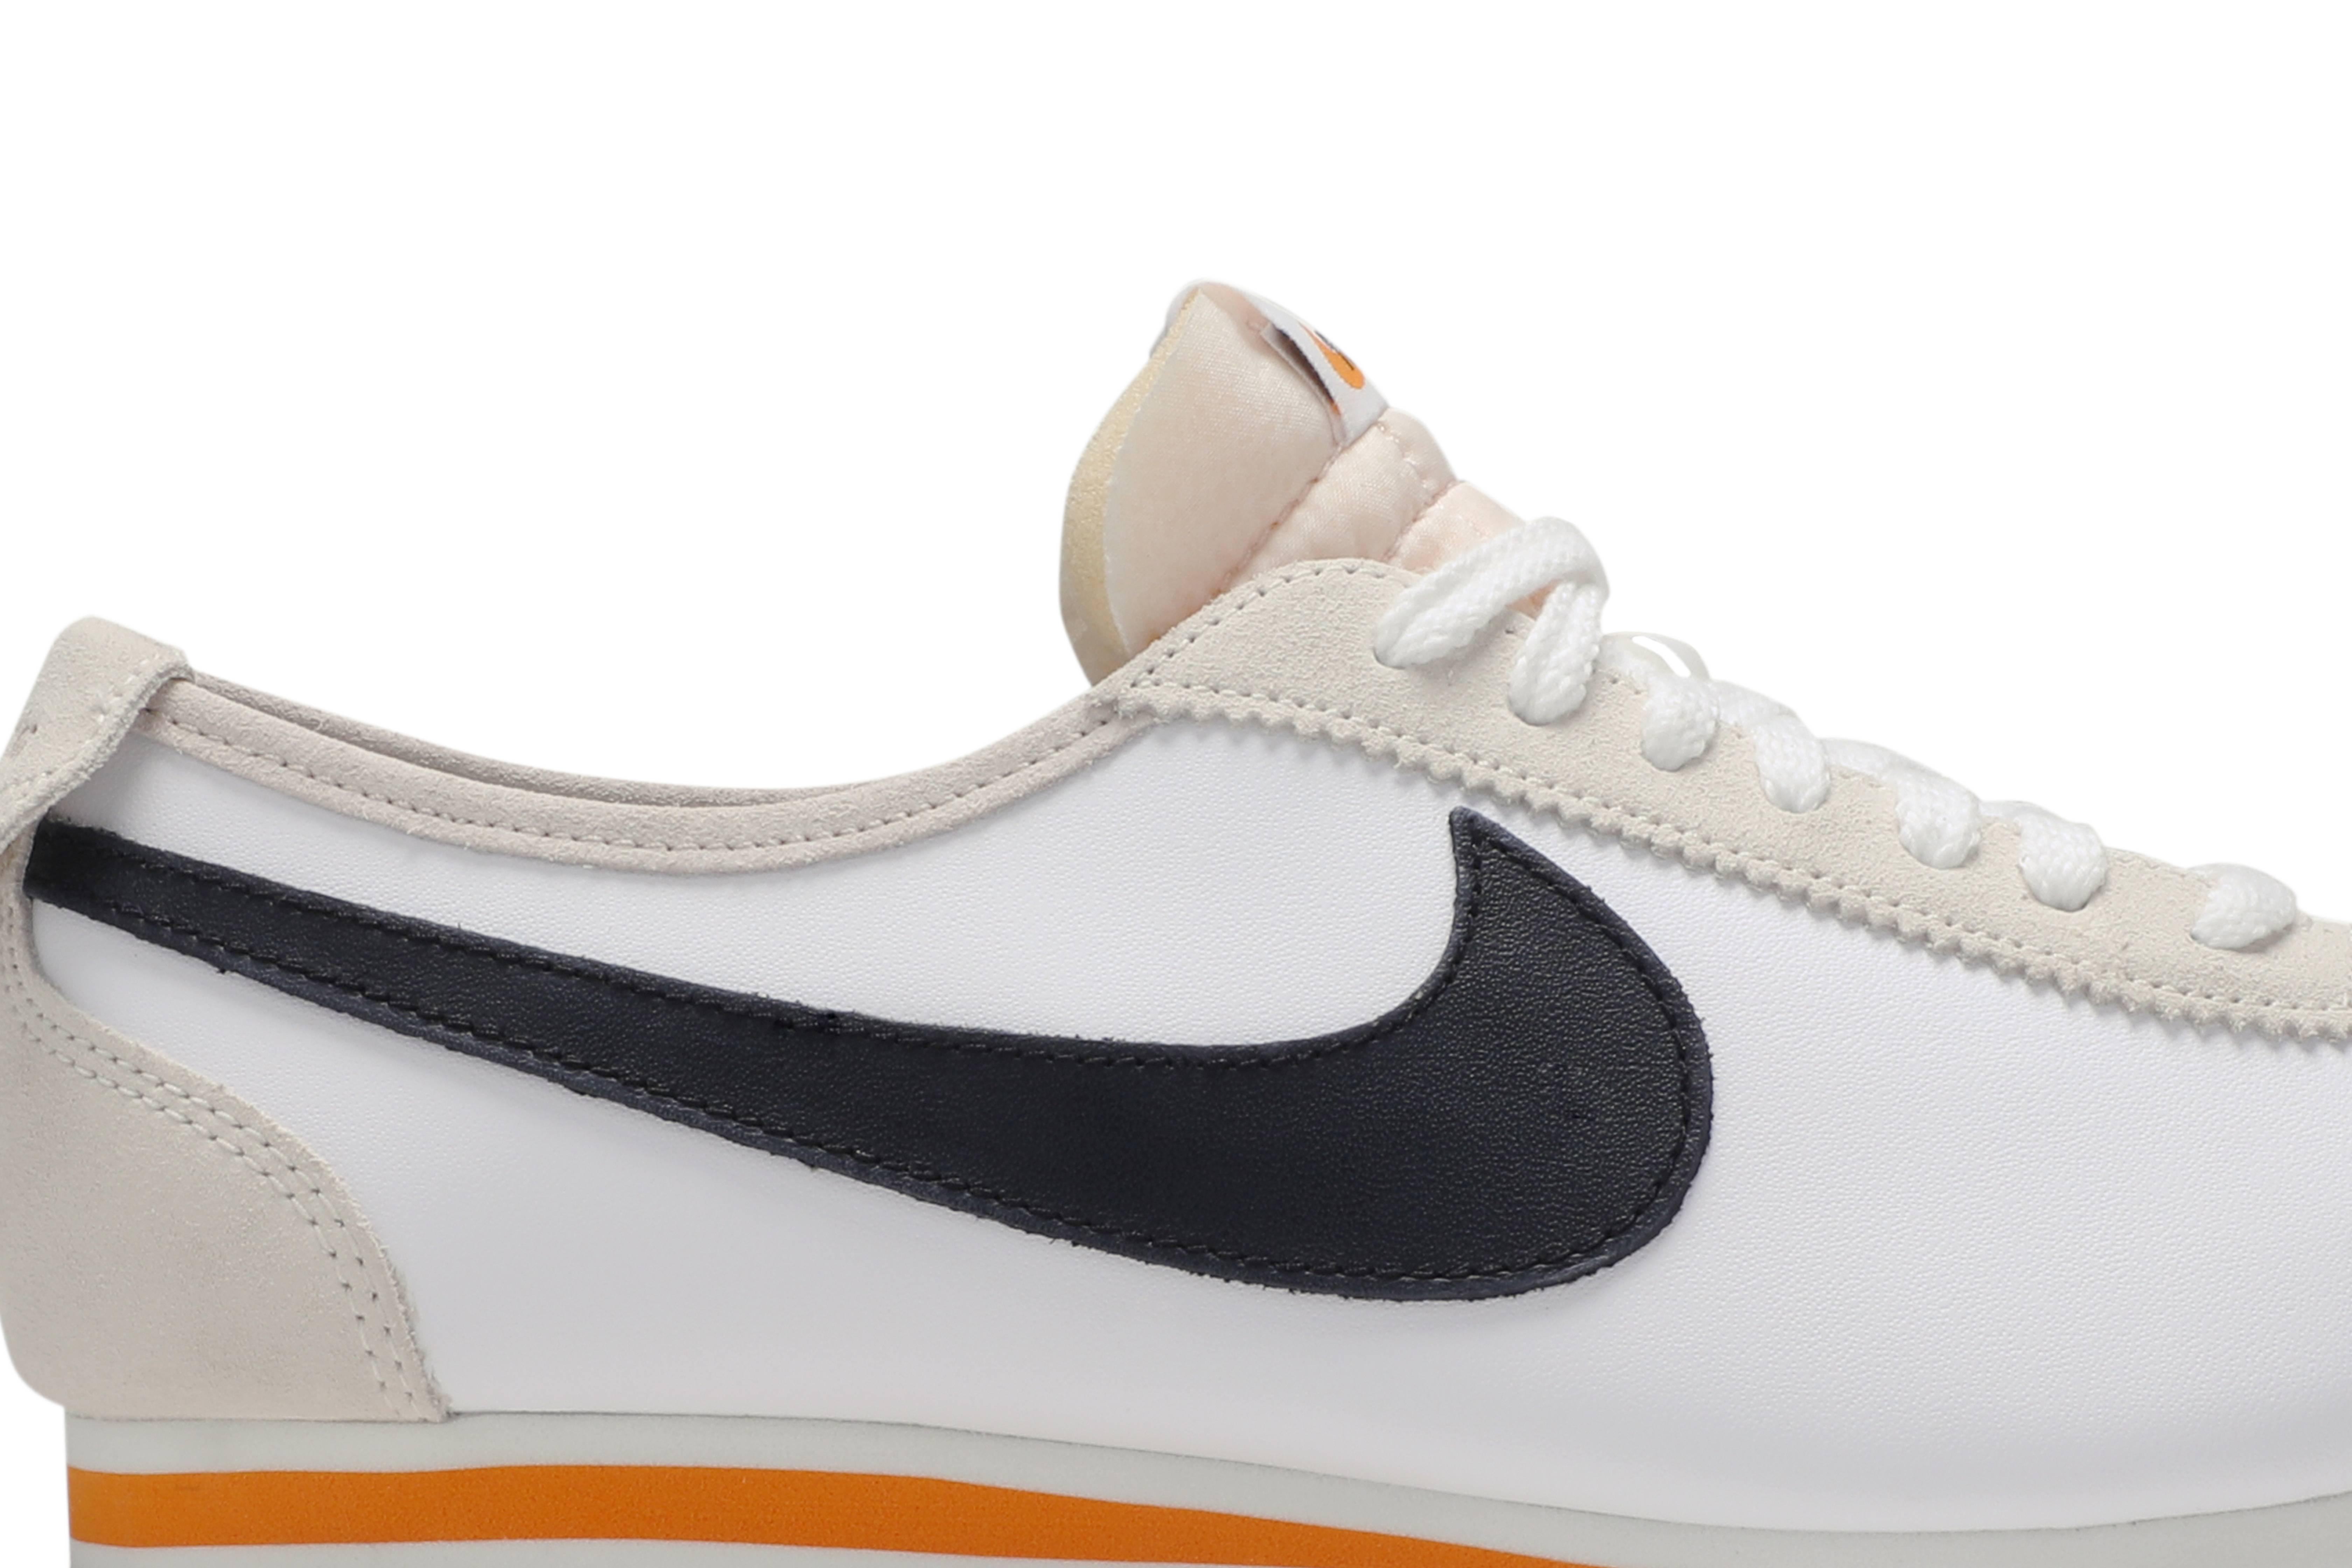 Nike Cortez 72 Blue Ribbon Sports in White/Black-Orange (White) for Men -  Save 36% - Lyst